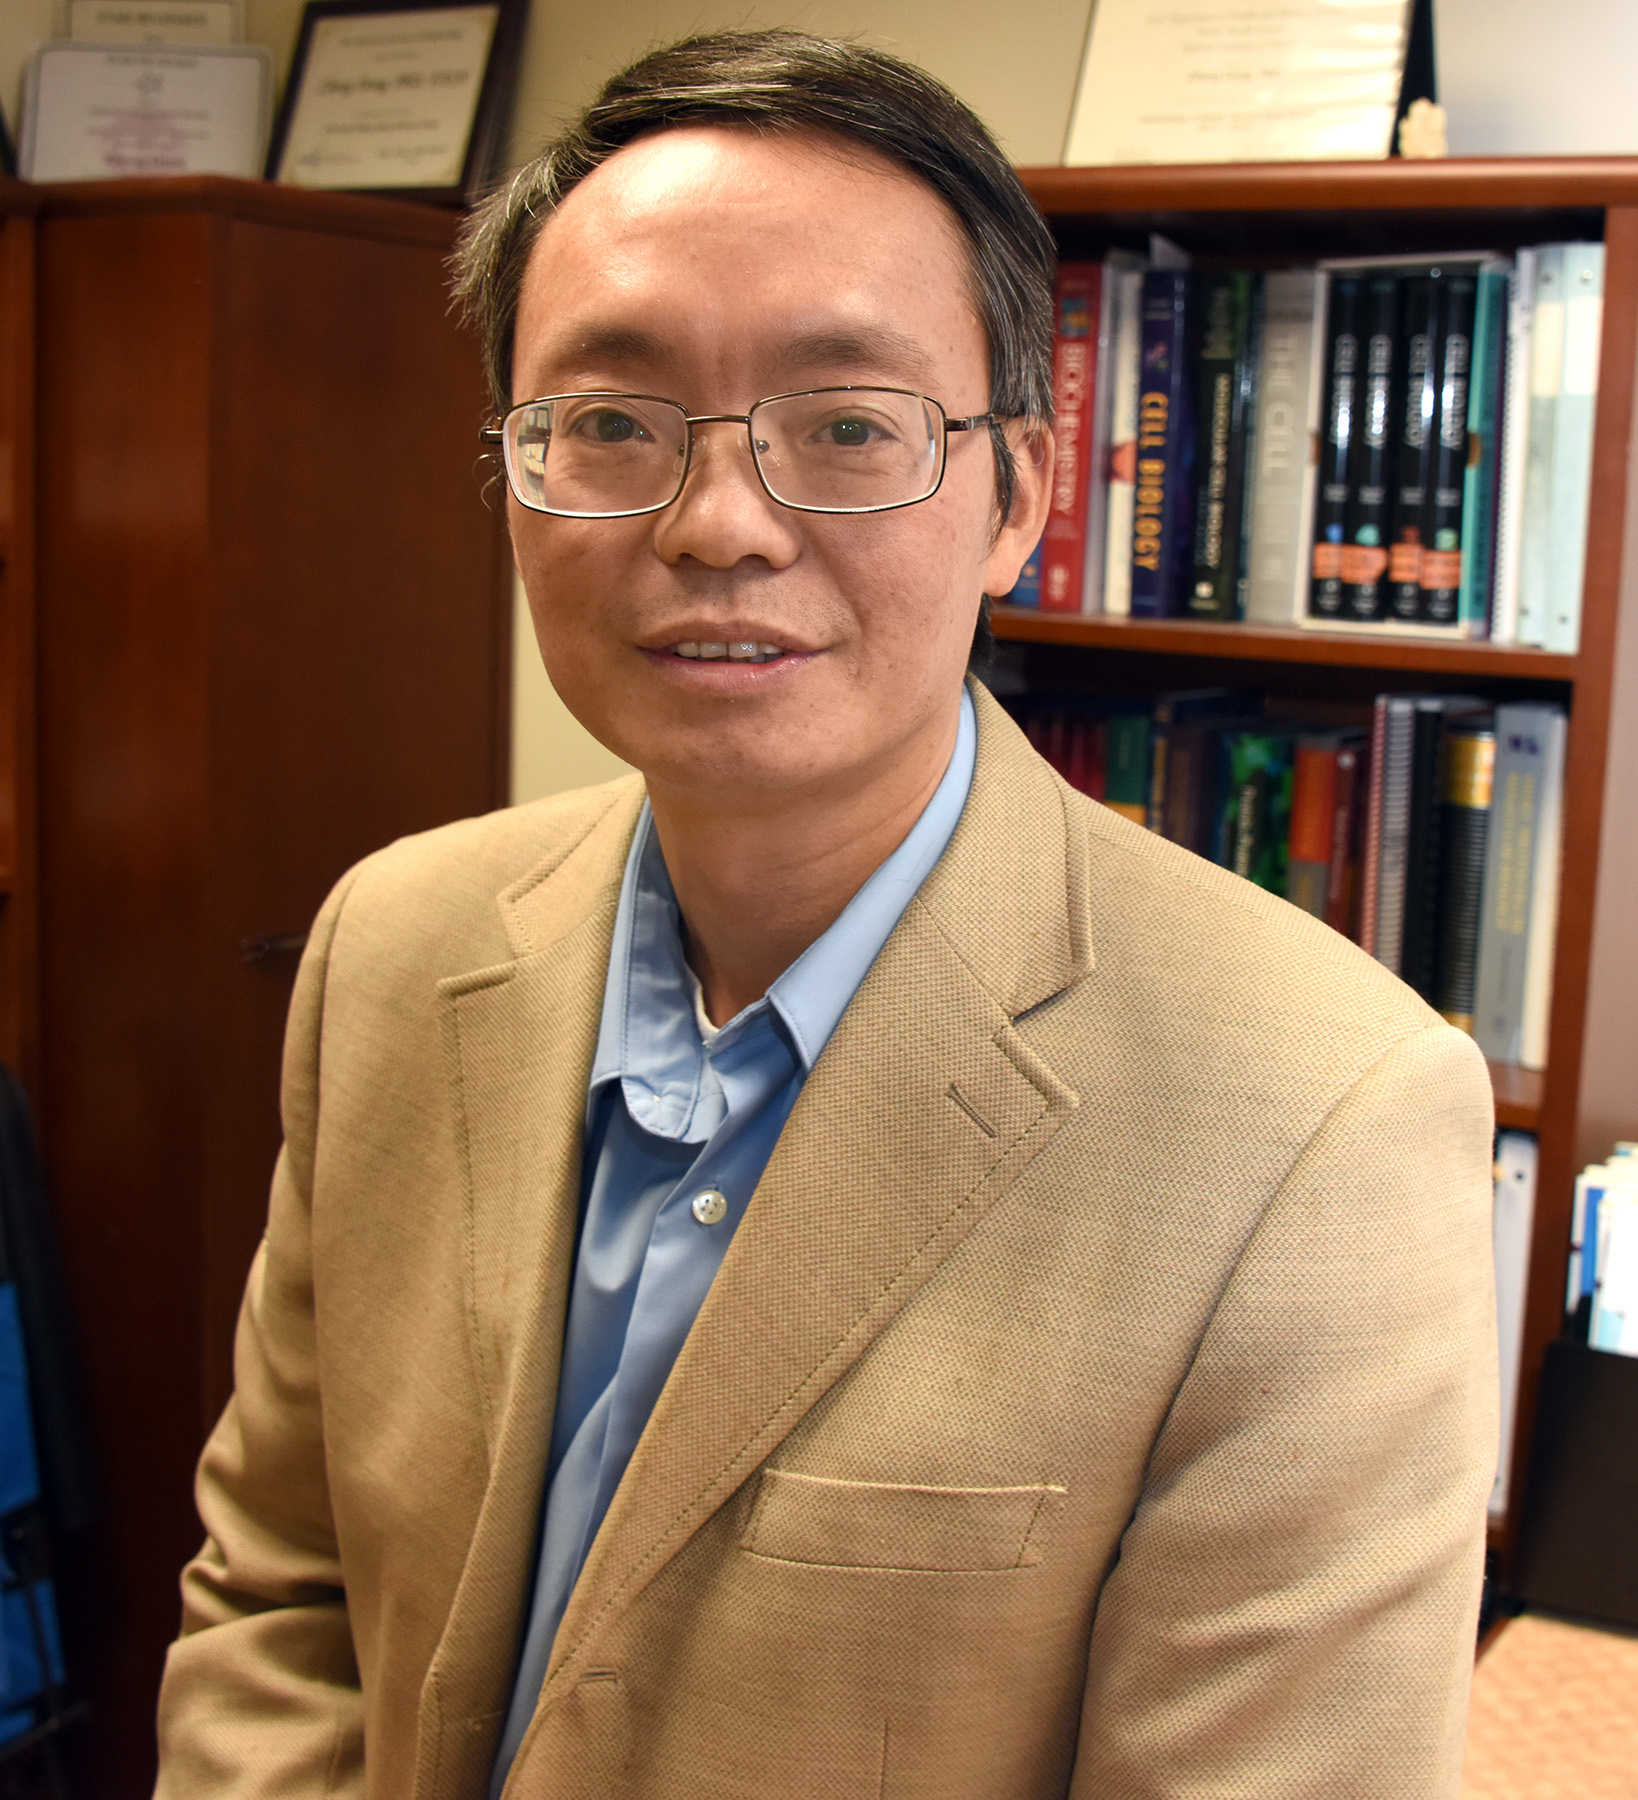 Dr. Zheng Dong